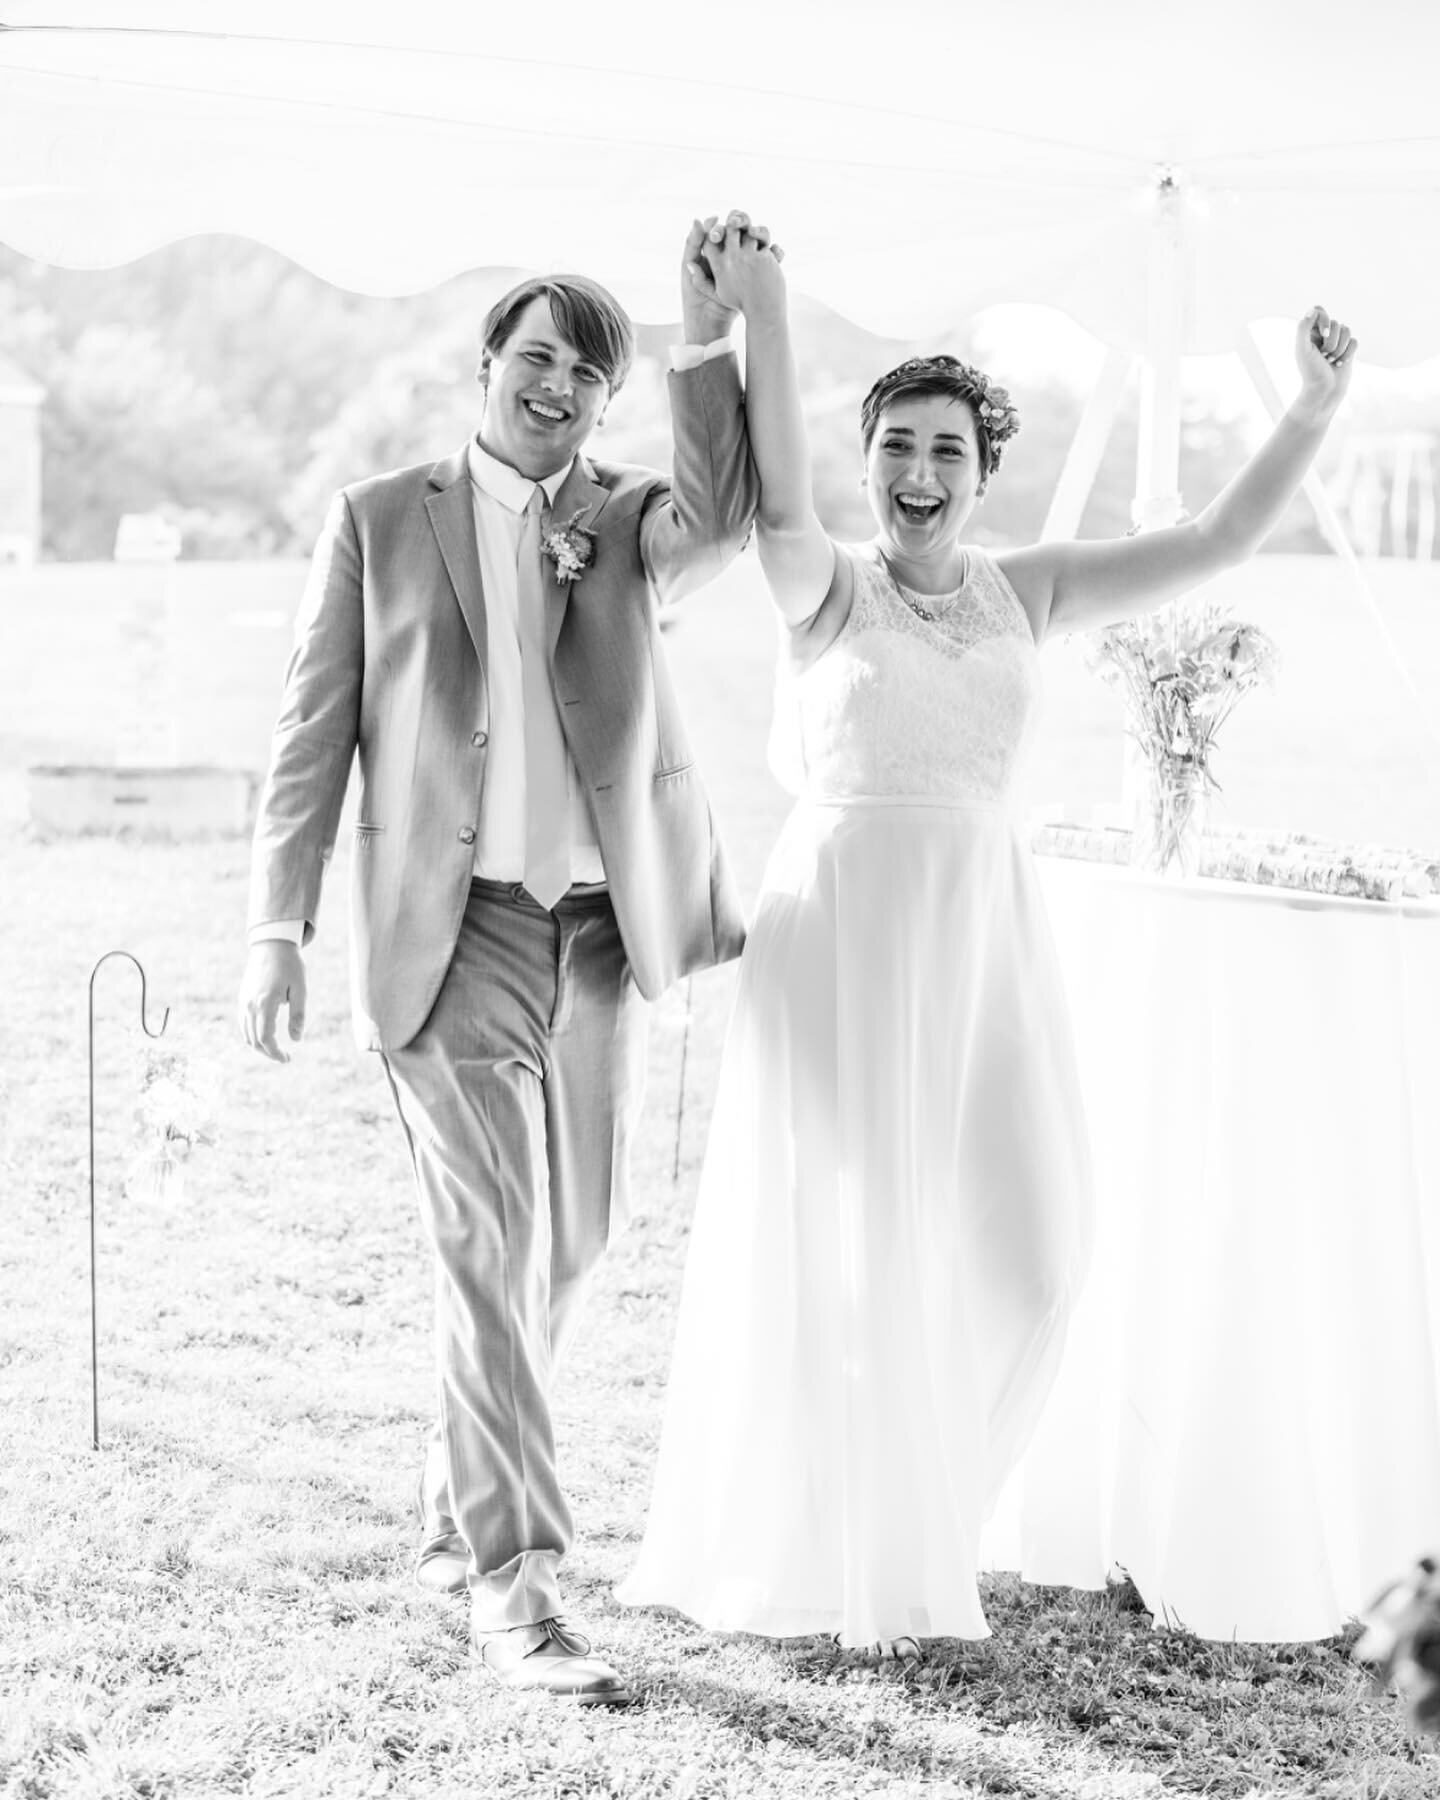 In celebration of Silver Linings first official social post 🍾

📸Photo cred: @laurendobish 
.
.
.
.
.
.
#silverlinings #weddingplanner
#newenglandweddings